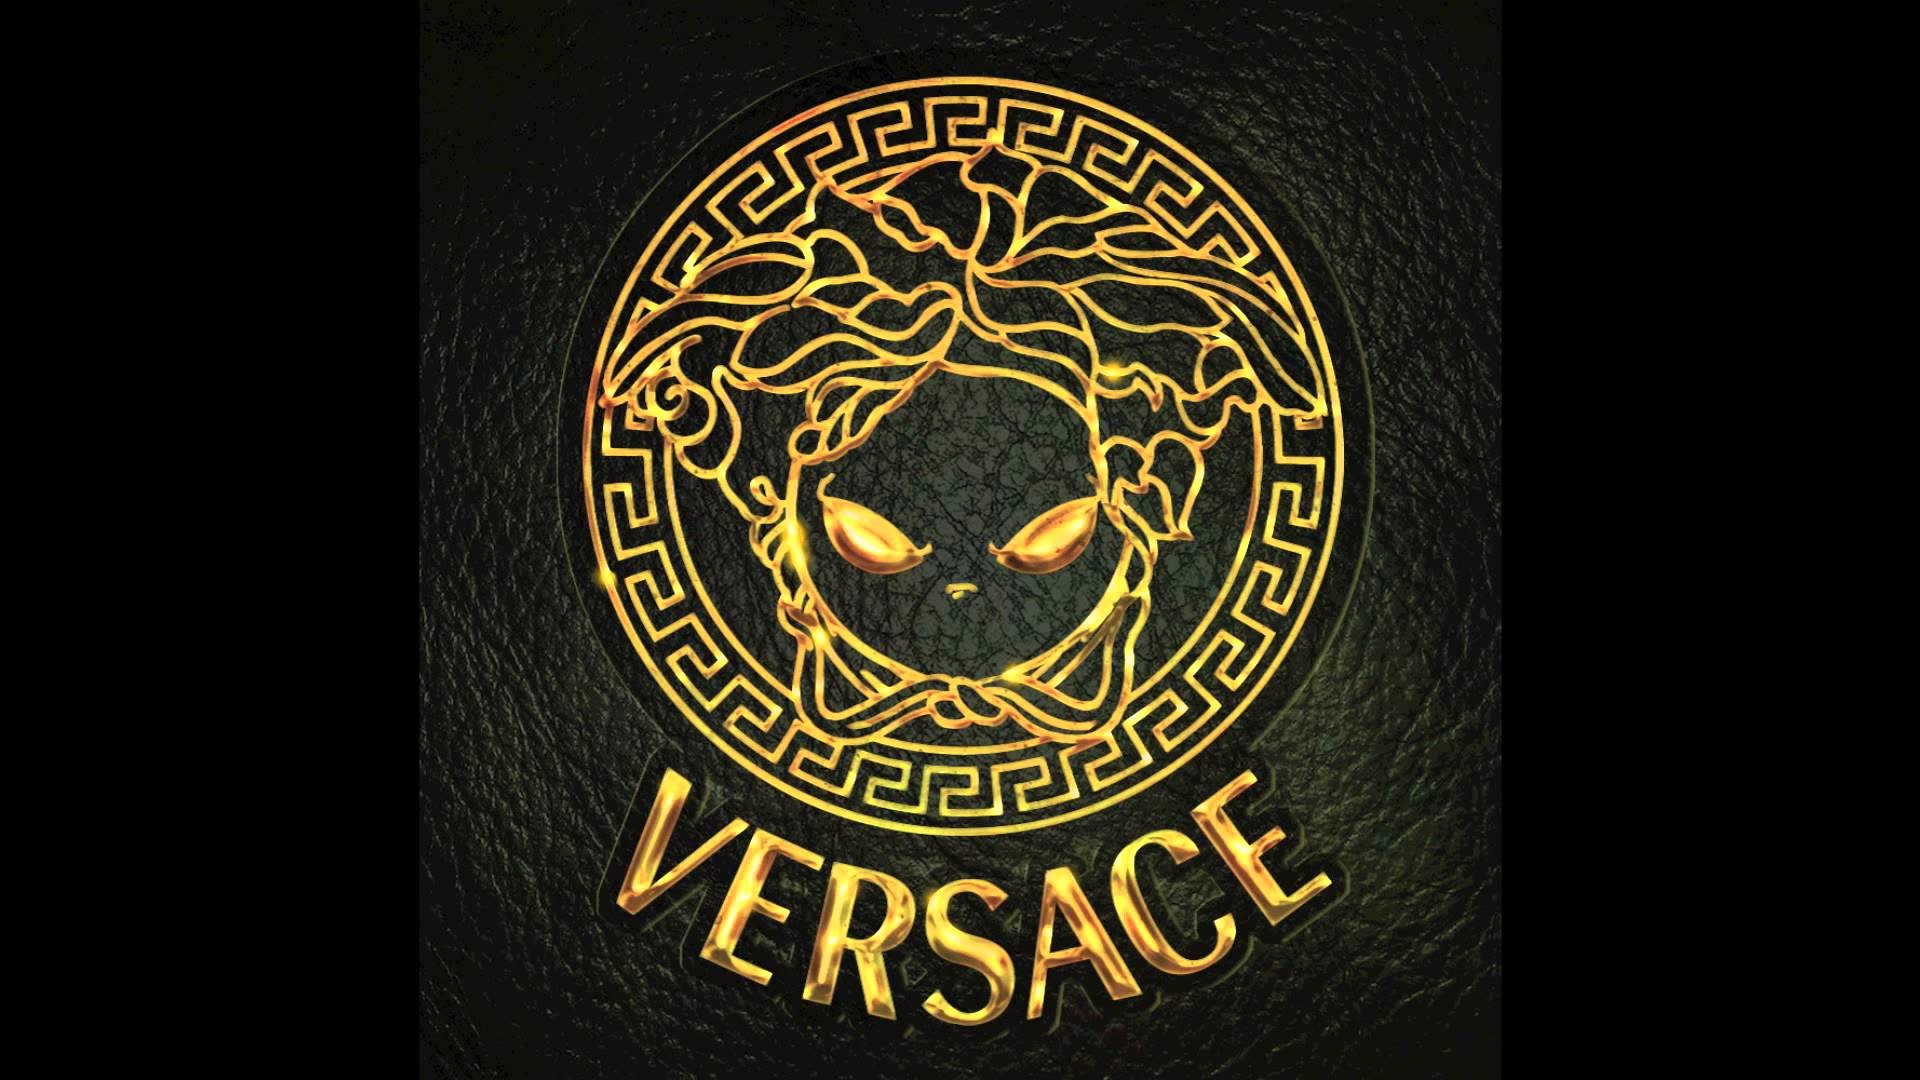 versace logo wallpaper hd